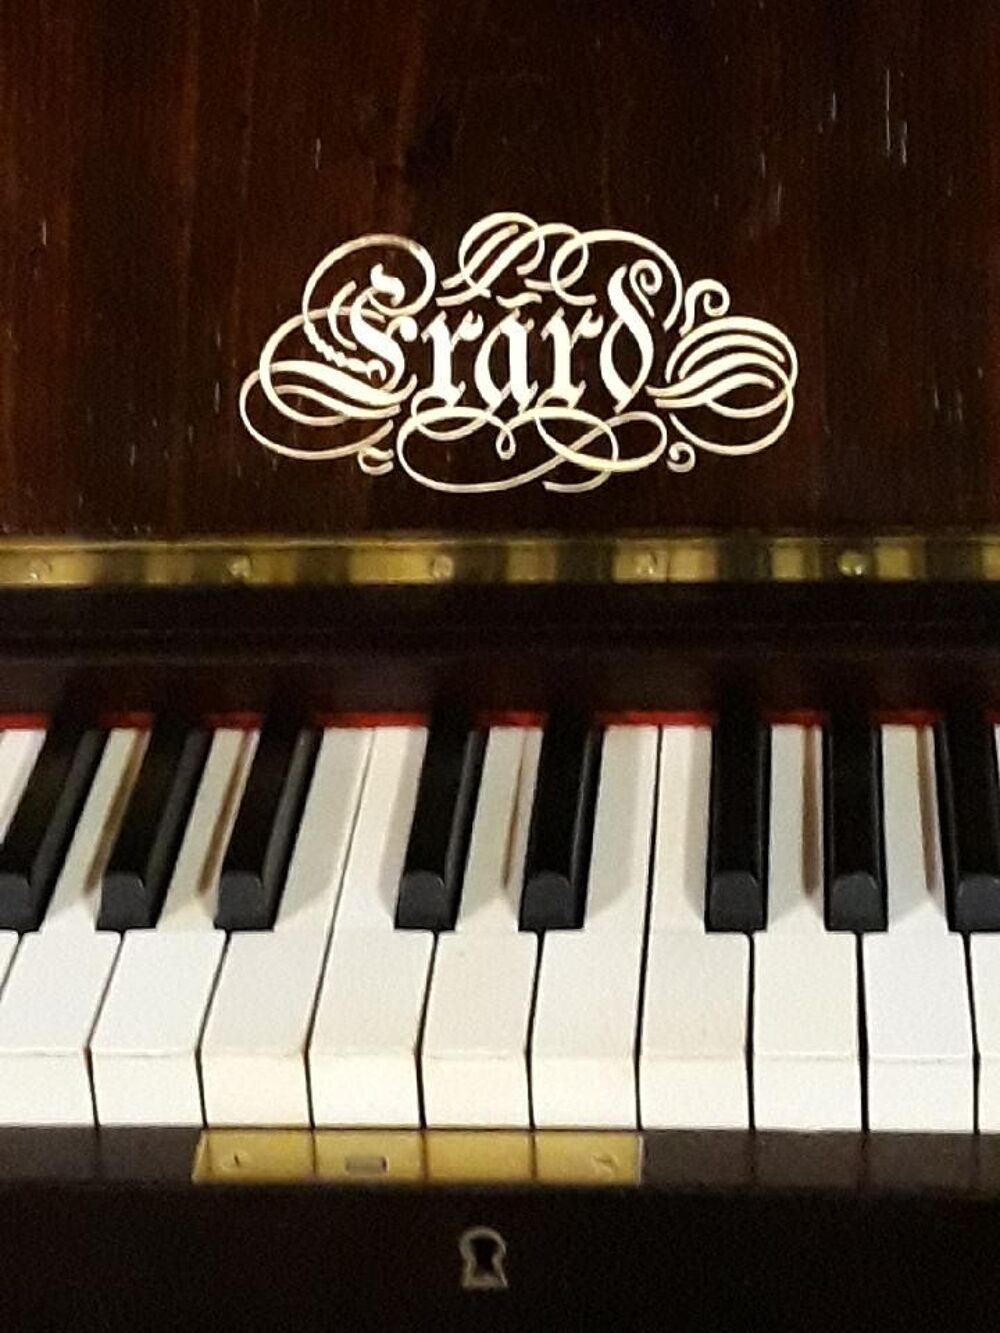 piano droit &Eacute;rard 128 n&deg;103570 ann&eacute;e 1913 Instruments de musique